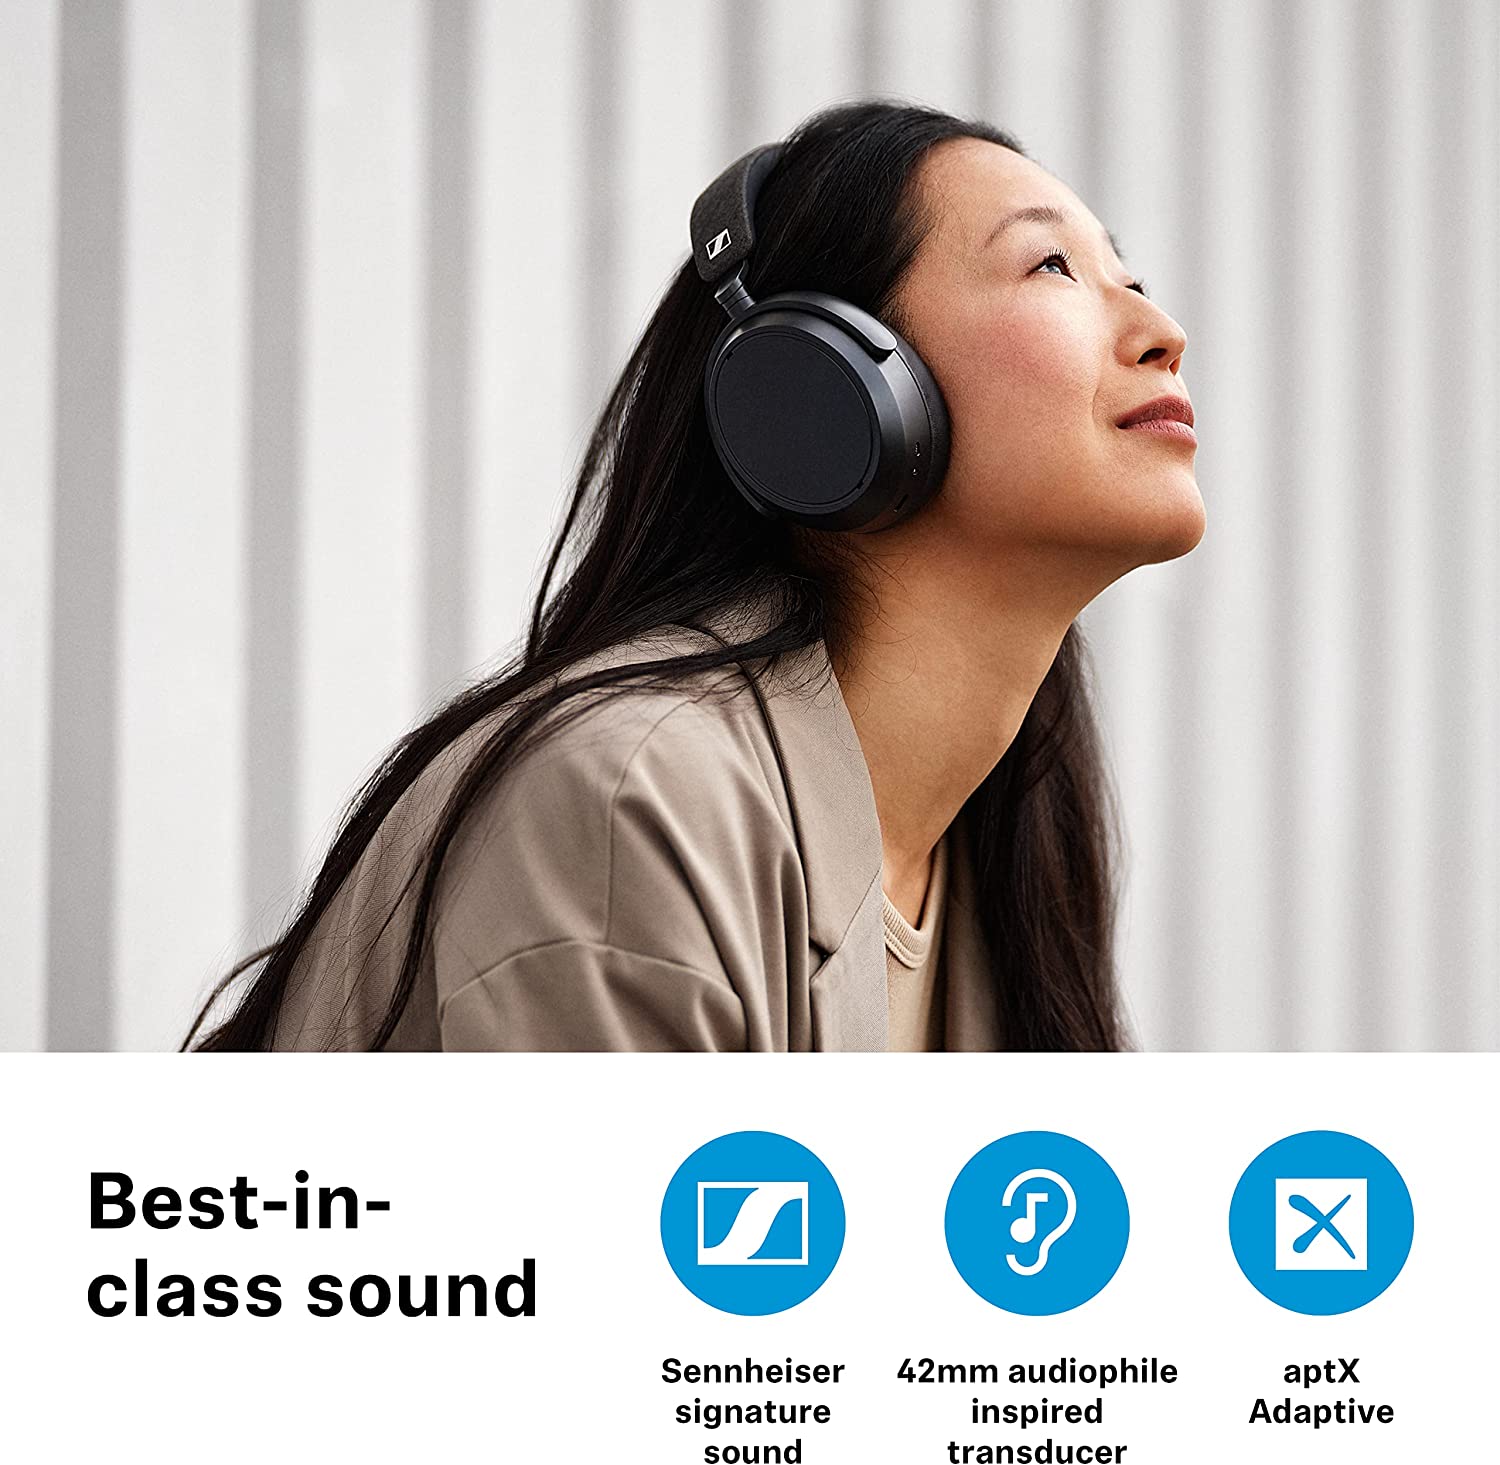 SENNHEISER Momentum 4 Wireless Bluetooth Headphones Crystal Clear Calls with Adaptive Noise Cancellation